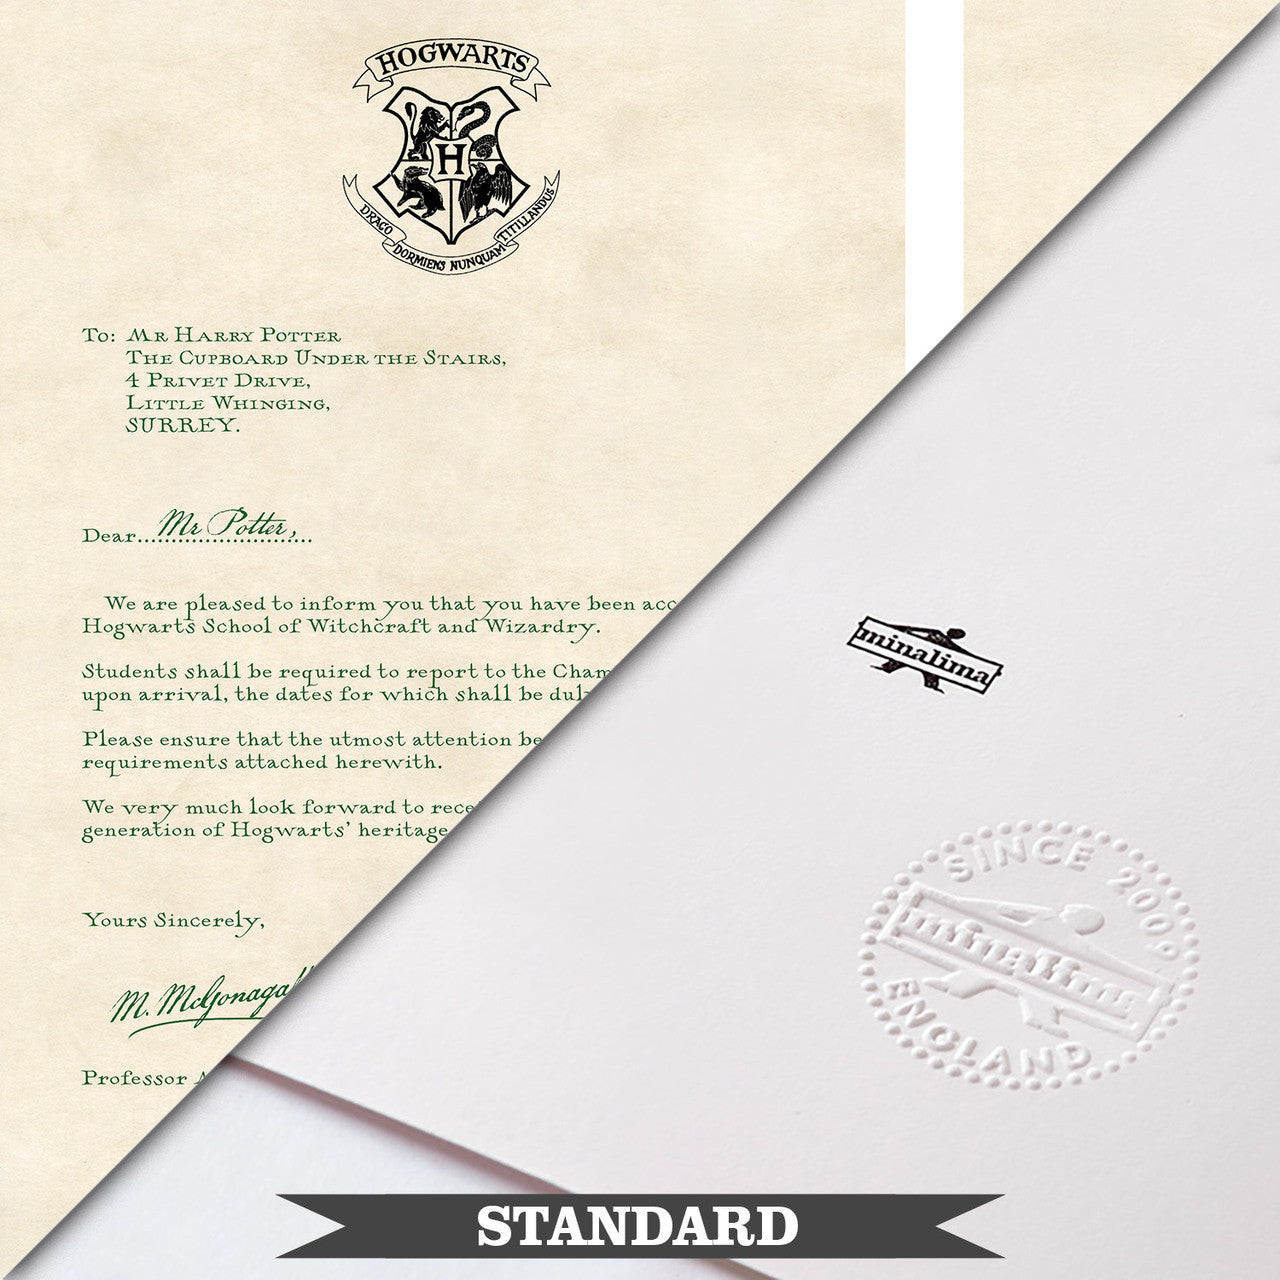 Harry Potter’s Hogwarts Acceptance Letter Limited Edition Art Print